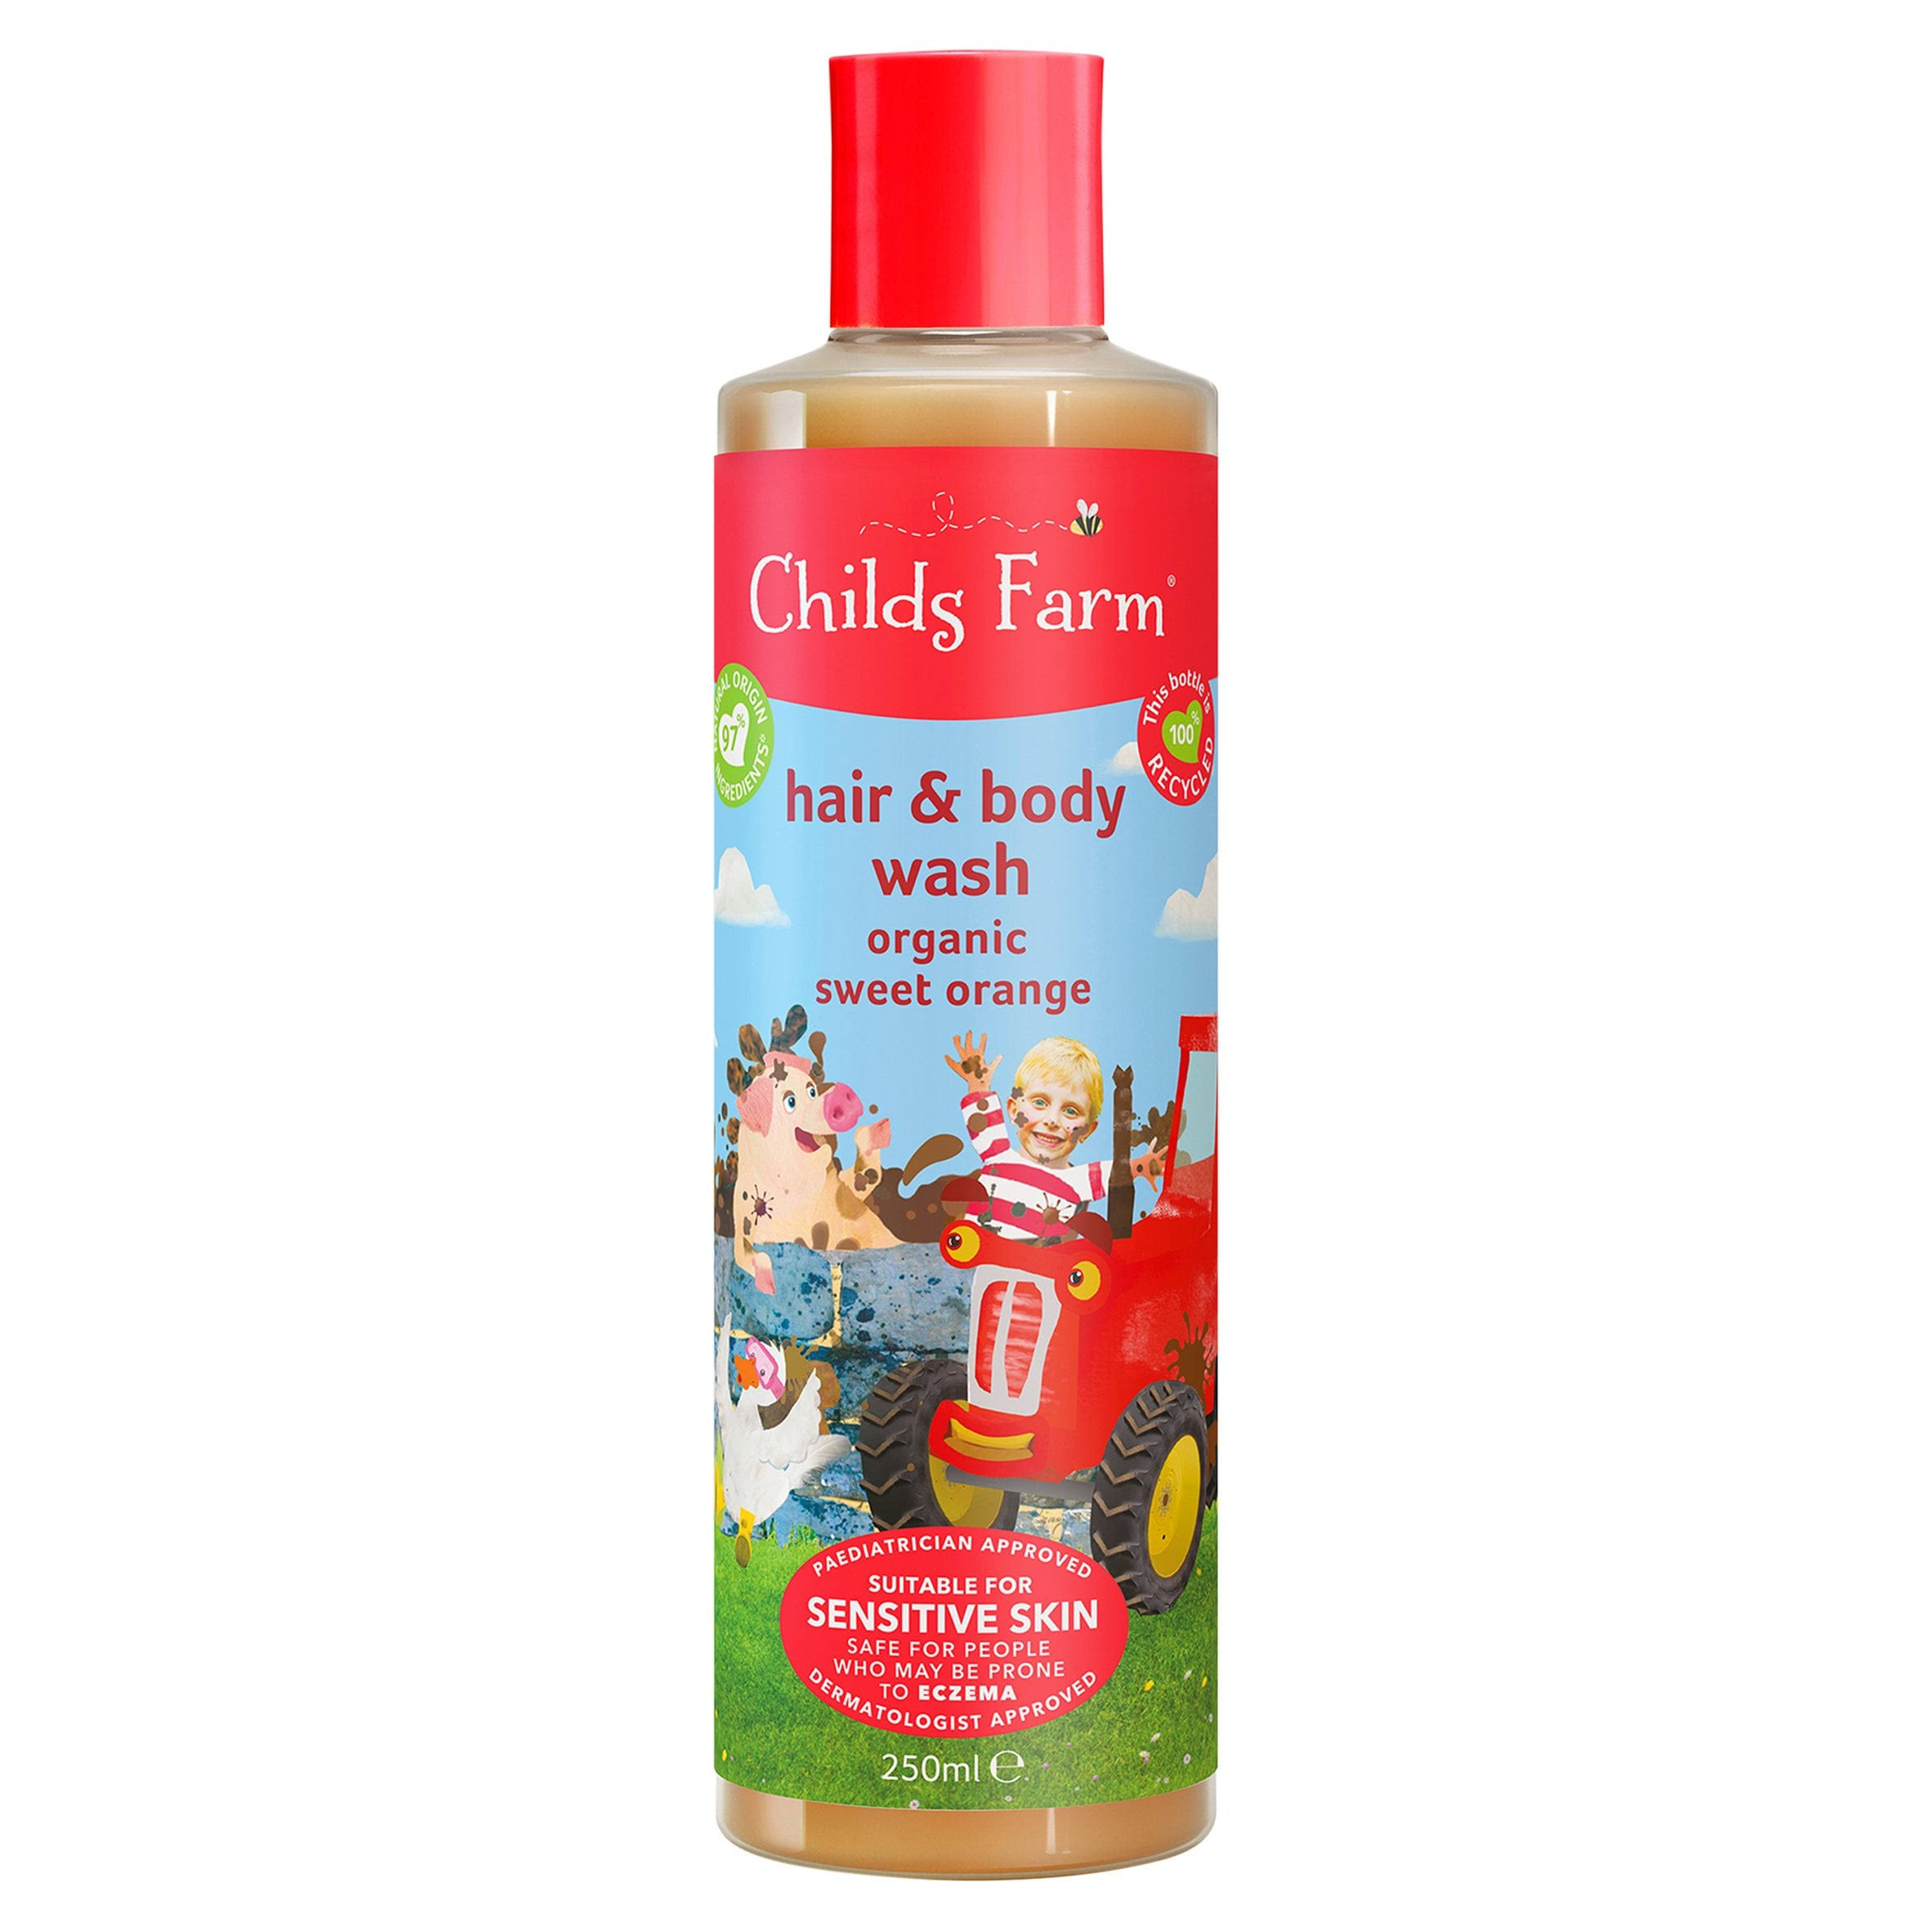 Childs Farm Hair & Body Wash - Sweet Orange, 250ml